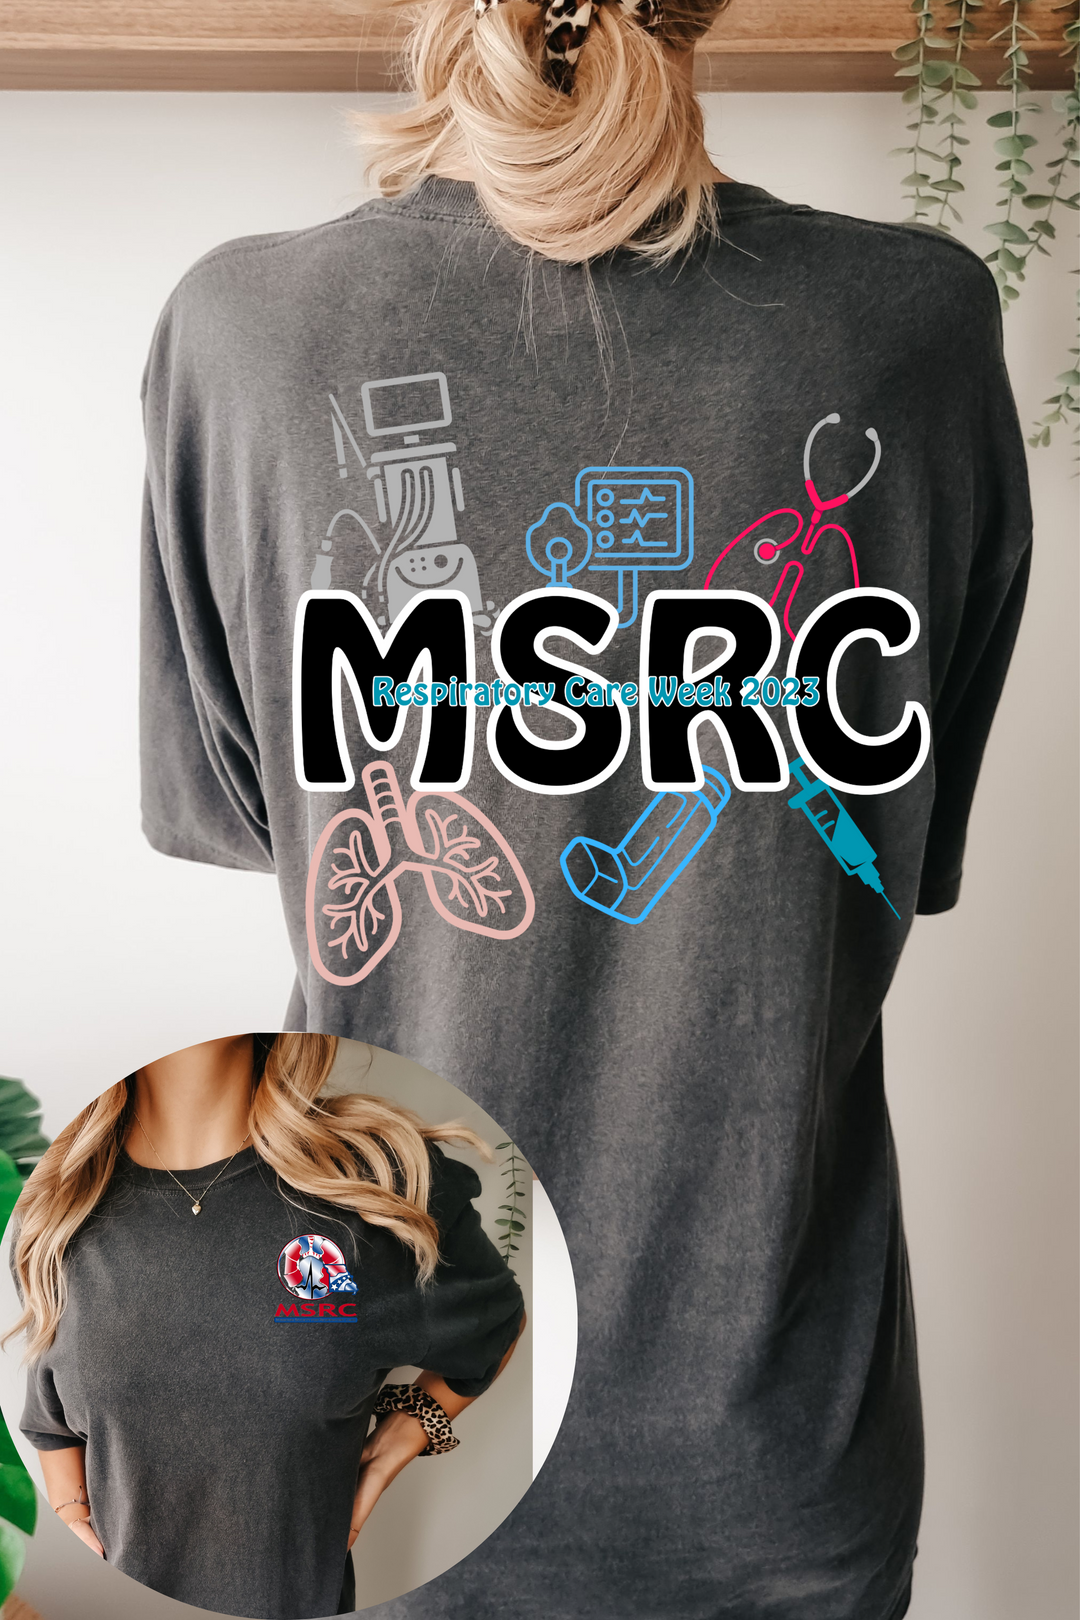 MSRC Care Week 2023